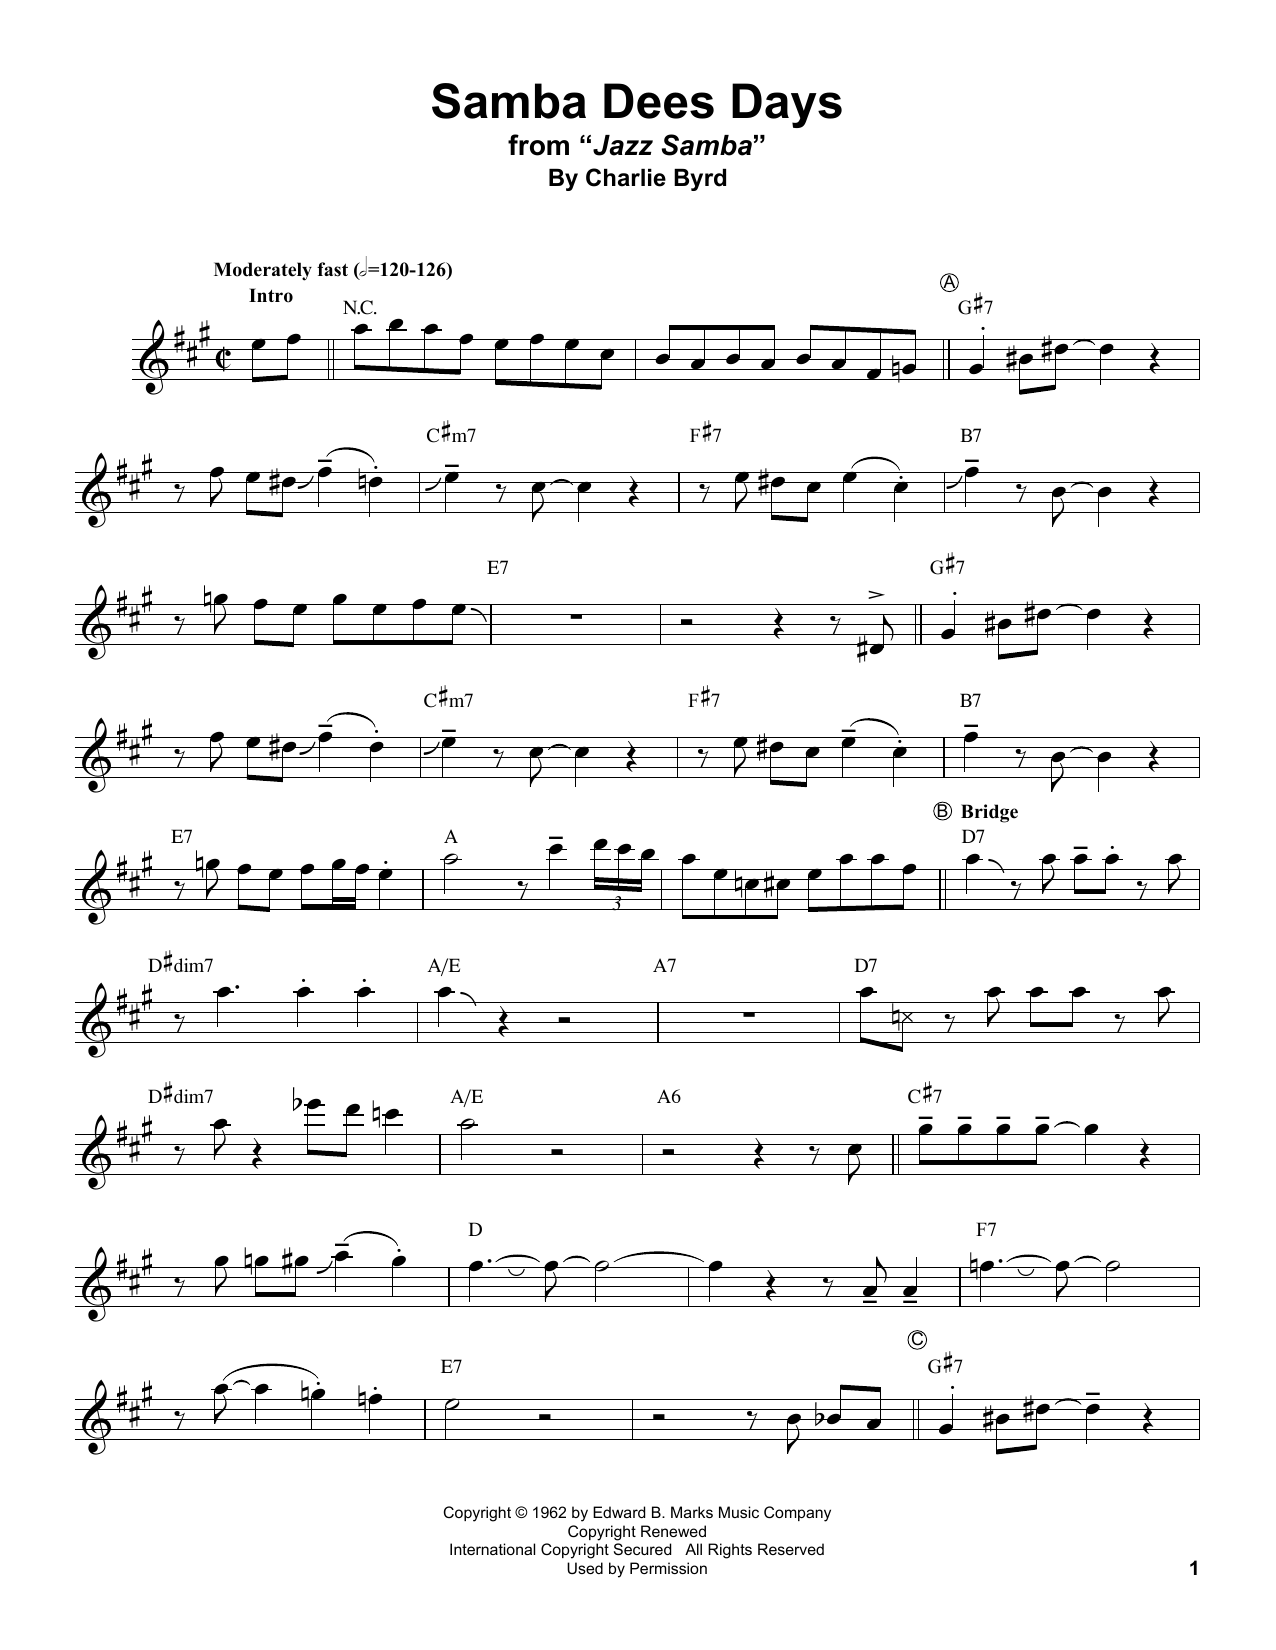 Stan Getz Samba Dees Days Sheet Music Notes & Chords for Alto Sax Transcription - Download or Print PDF